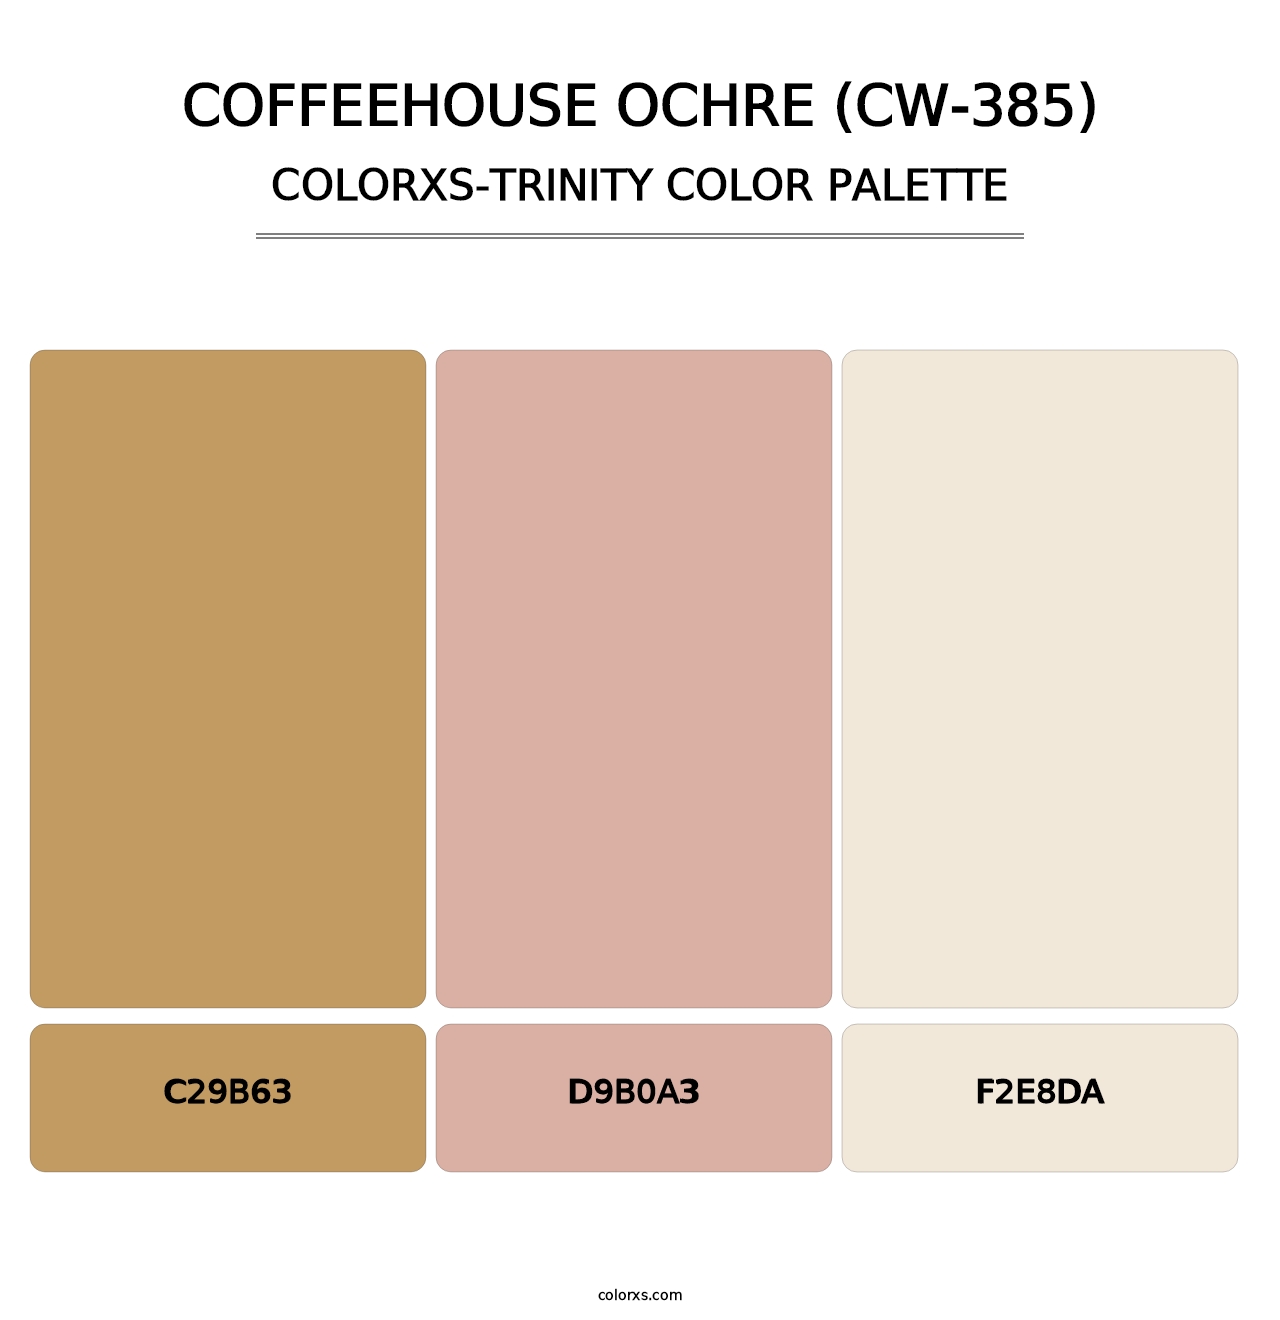 Coffeehouse Ochre (CW-385) - Colorxs Trinity Palette